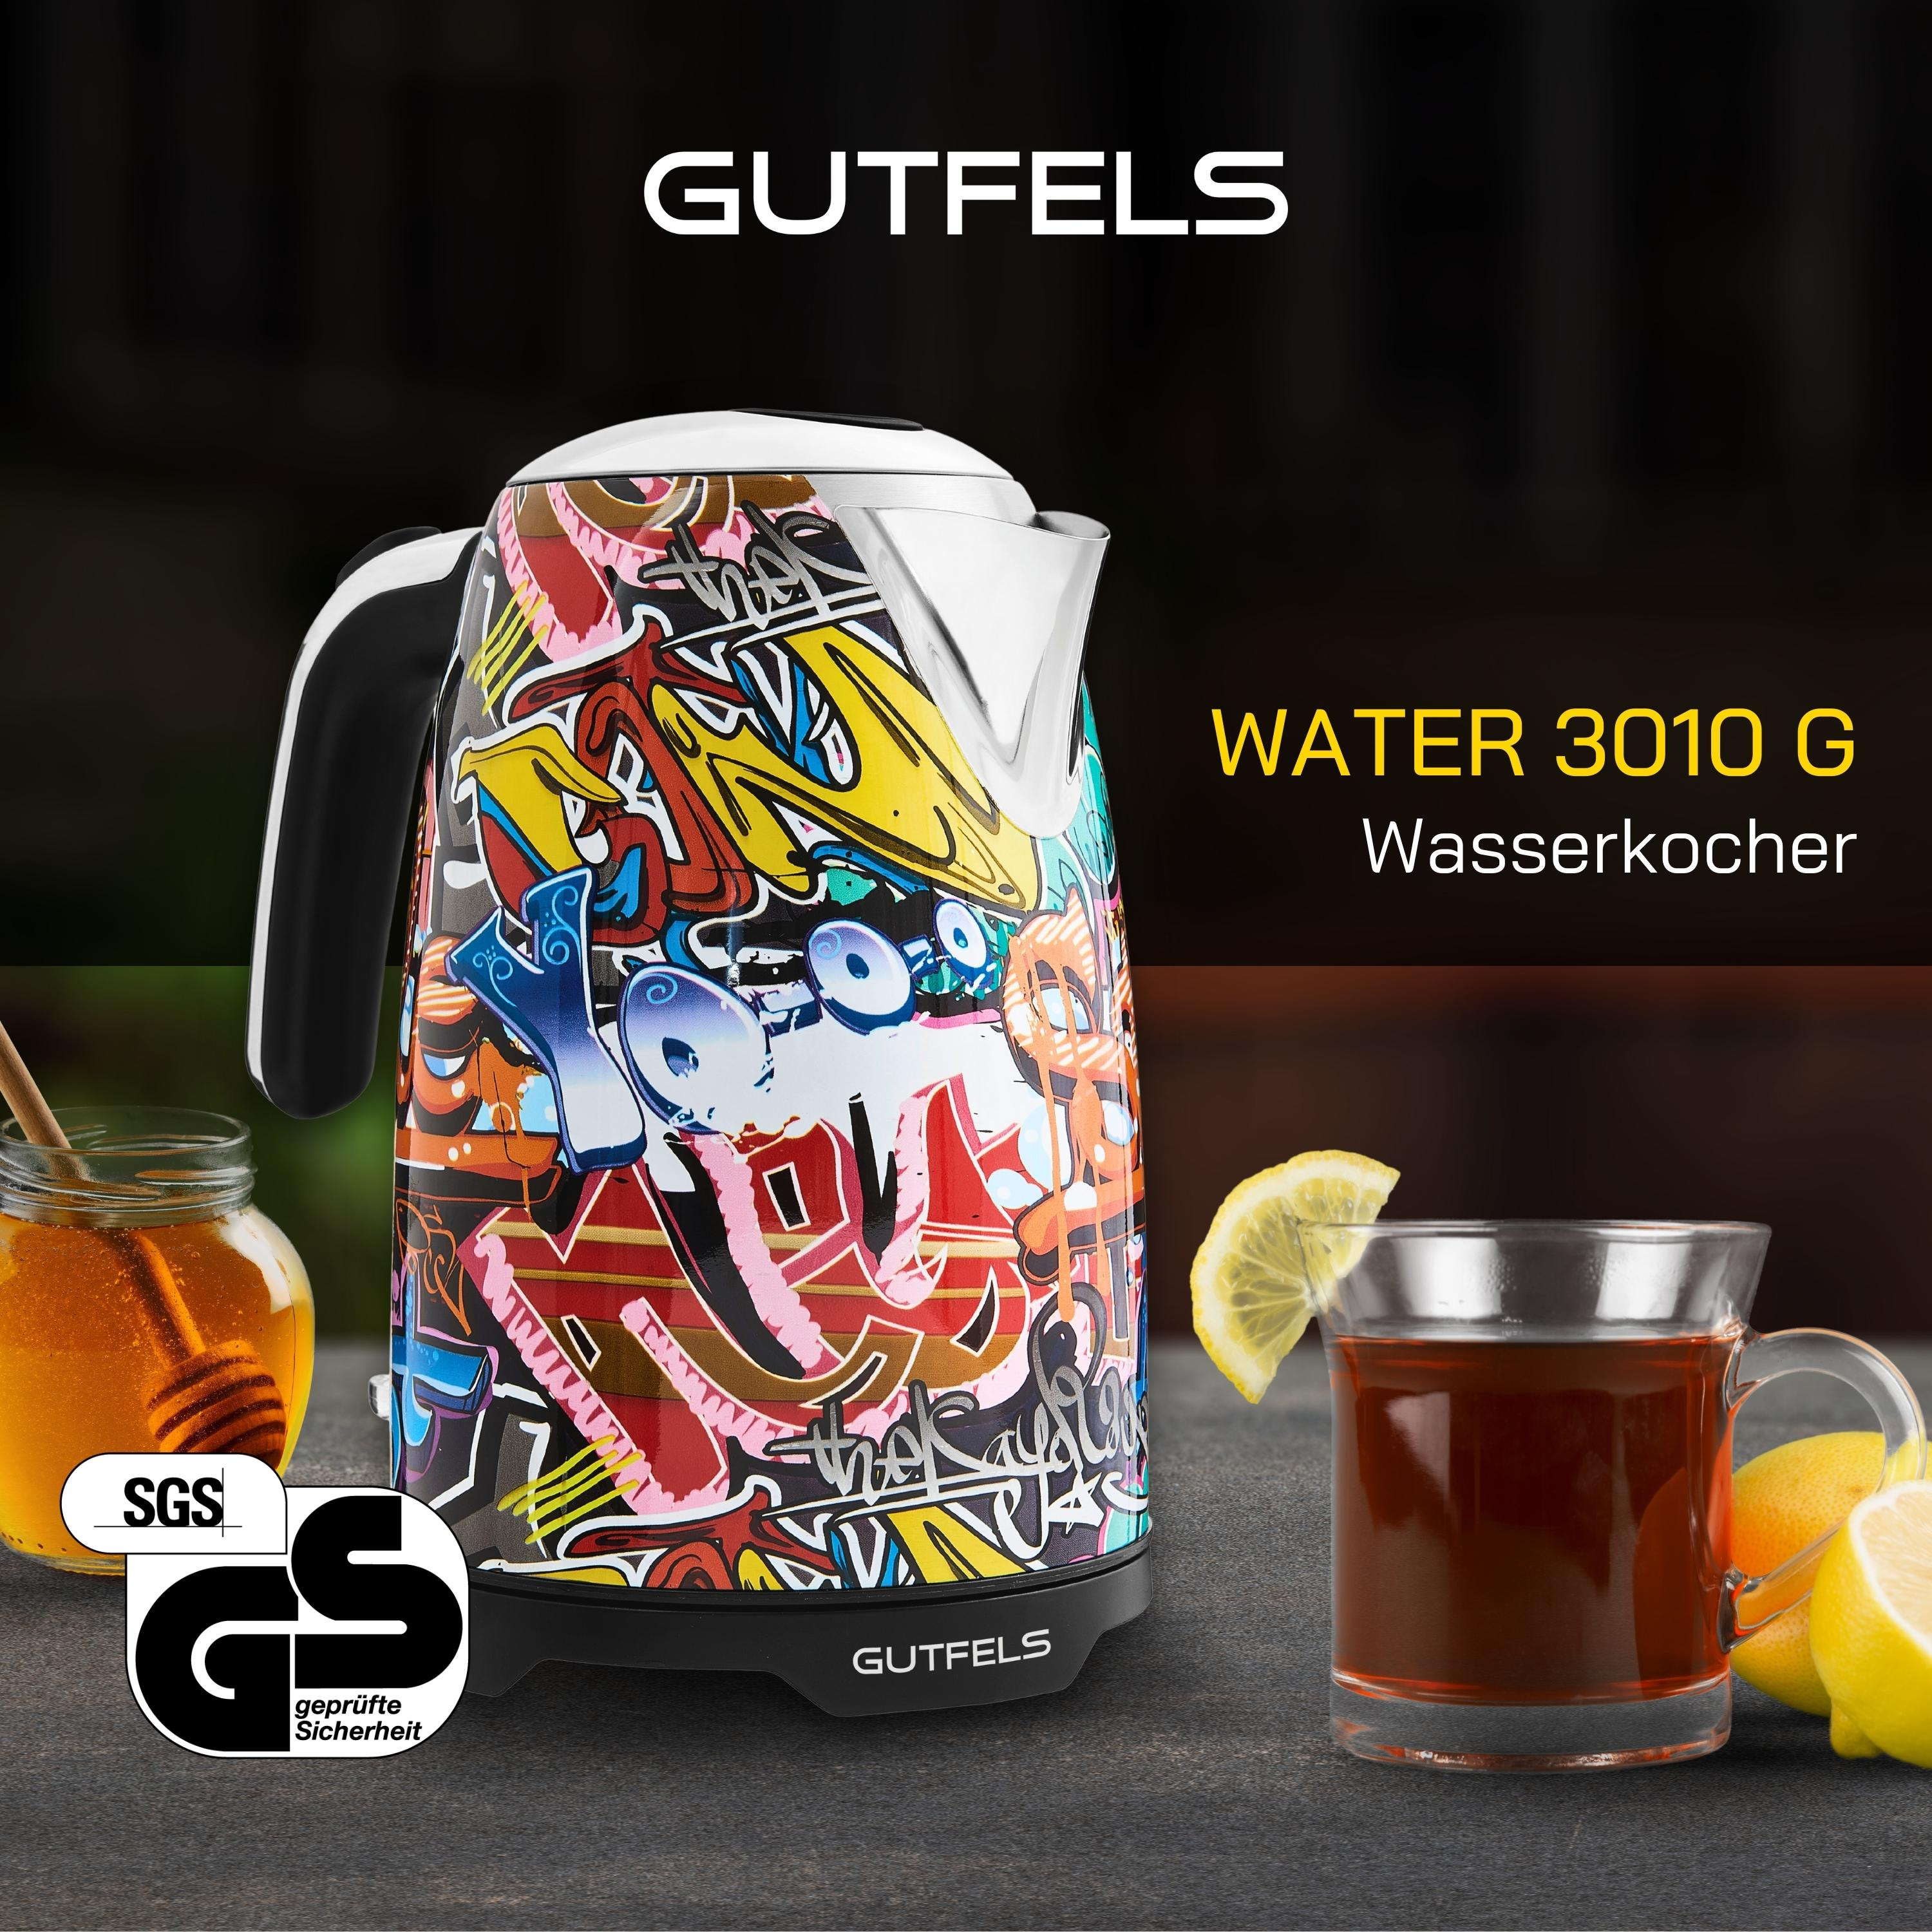 GUTFELS WATER G 3010 Wasserkocher, Bunt